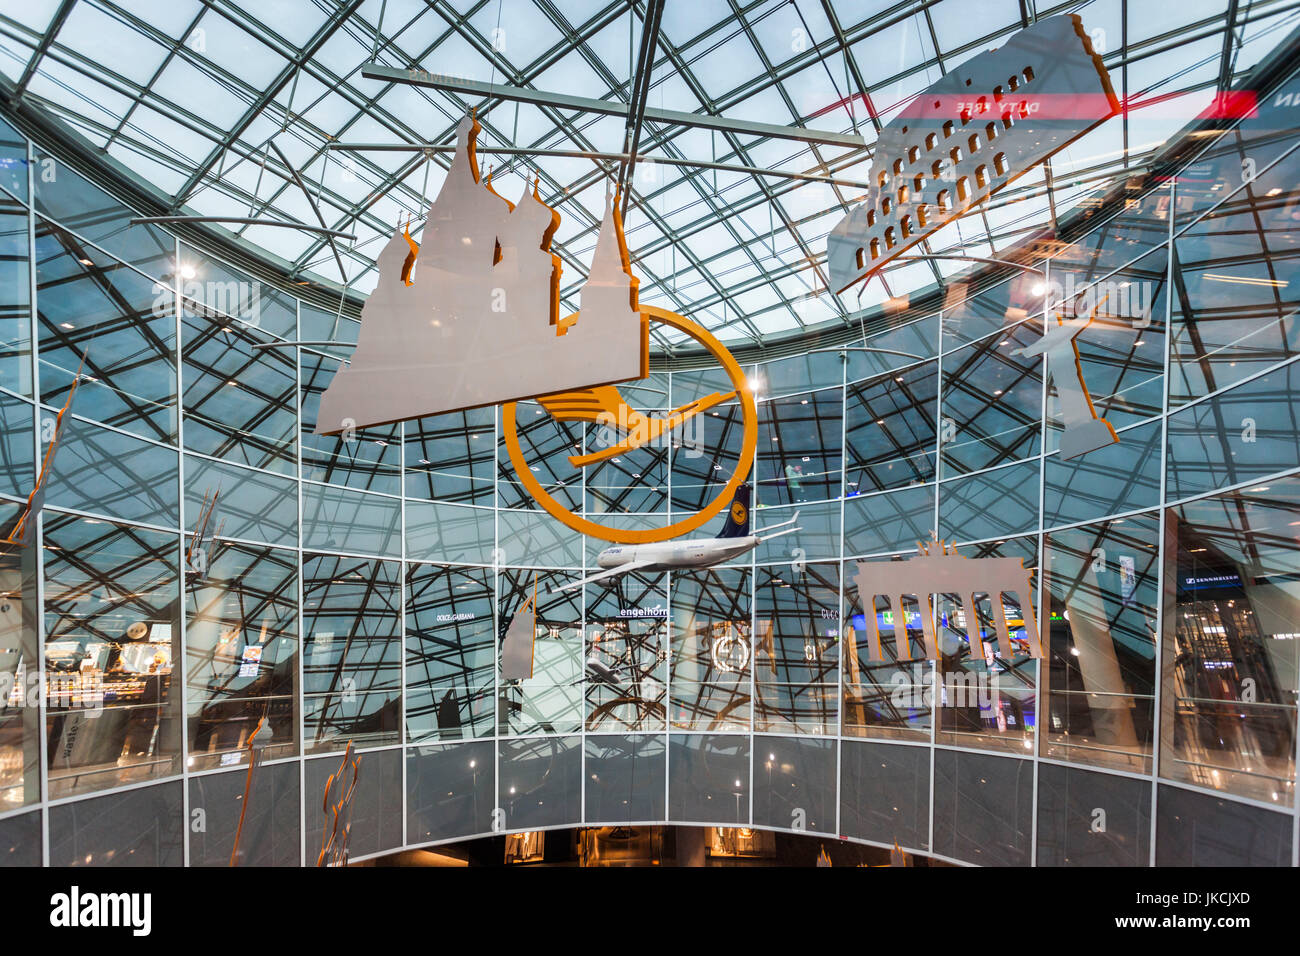 Germany, Frankfurt Am Main, Terminal 1 at Frankfurt International Airport, lobby area with art of world destinations Stock Photo